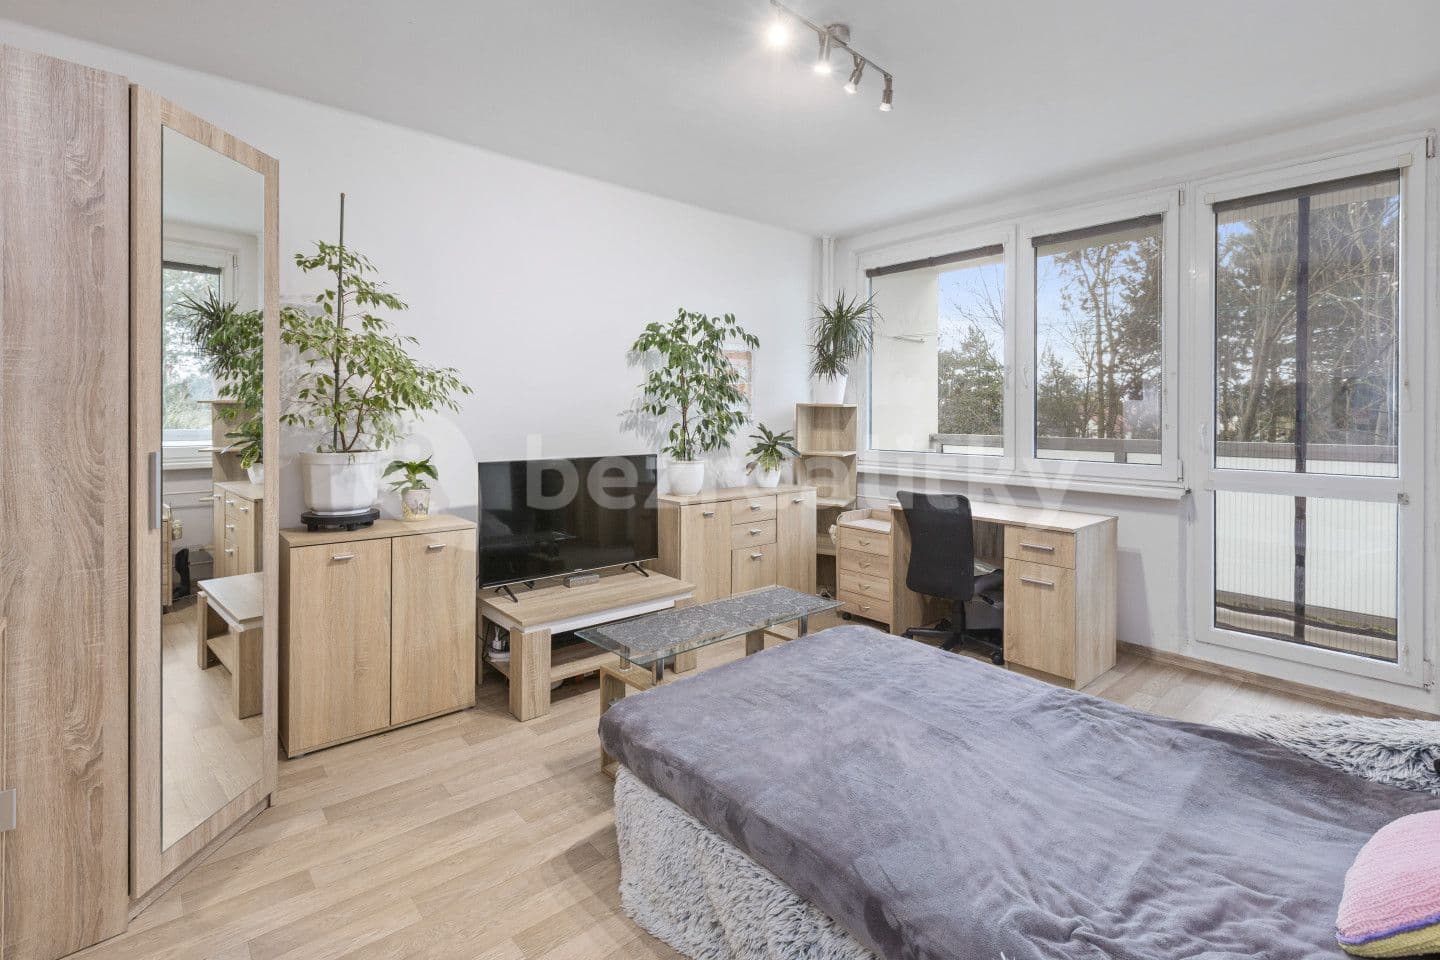 Predaj bytu 1-izbový 35 m², Třebechovická, Hradec Králové, Královéhradecký kraj